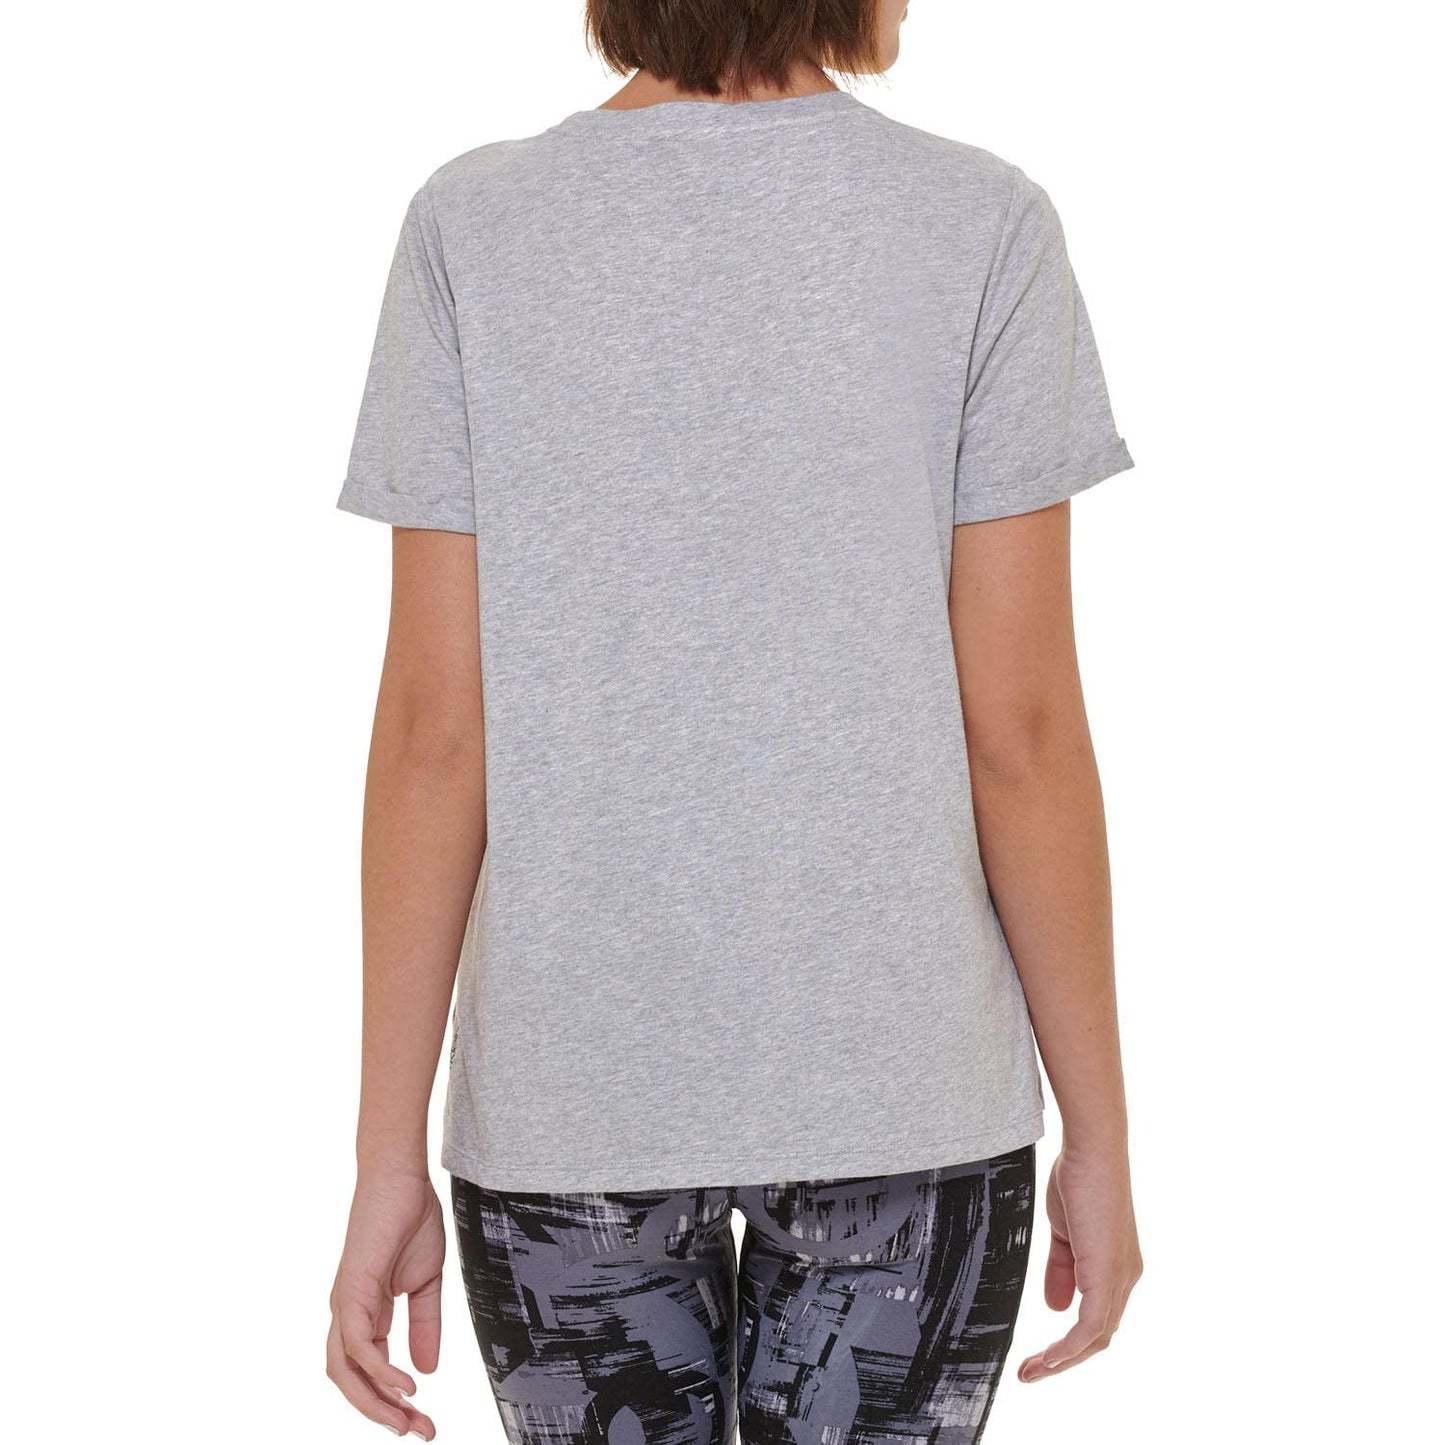 Calvin Klein Womens T Shirts Classic Crew Neck Cotton Short Sleeve Logo Tee - Pearl Grey Heather Drybrush Logo Black X-Small